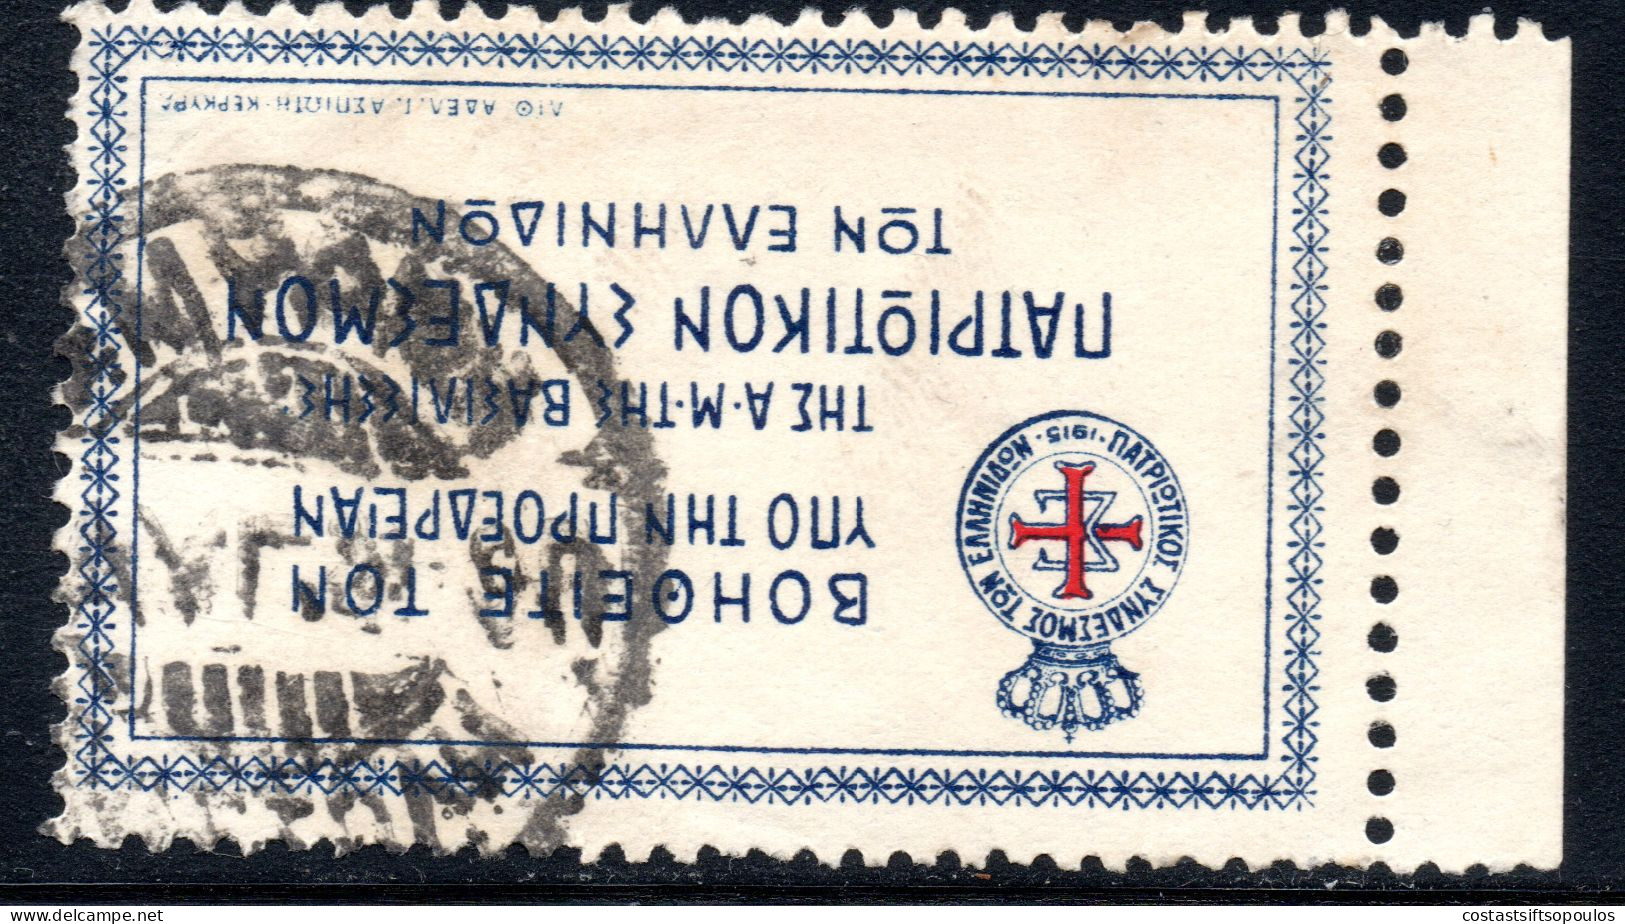 1967.GREECE. MINOR ASIA CAMPAIGN. (5 L.) WOMEN'S PATRIOTIC LEAGUE 1921 SMYRRNE POSTMARK - Smyrma & Kleinasien